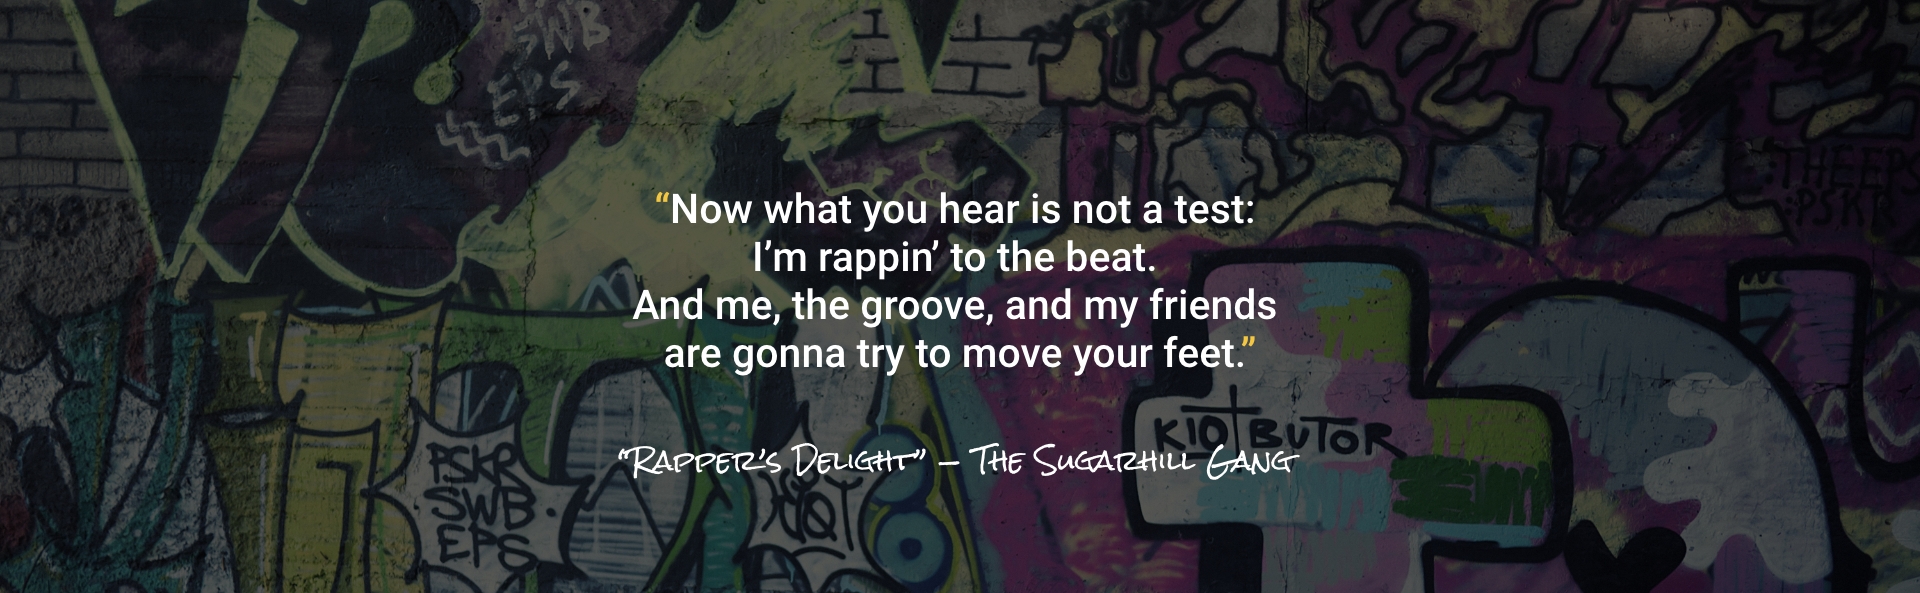 Sugarhill Gang quote